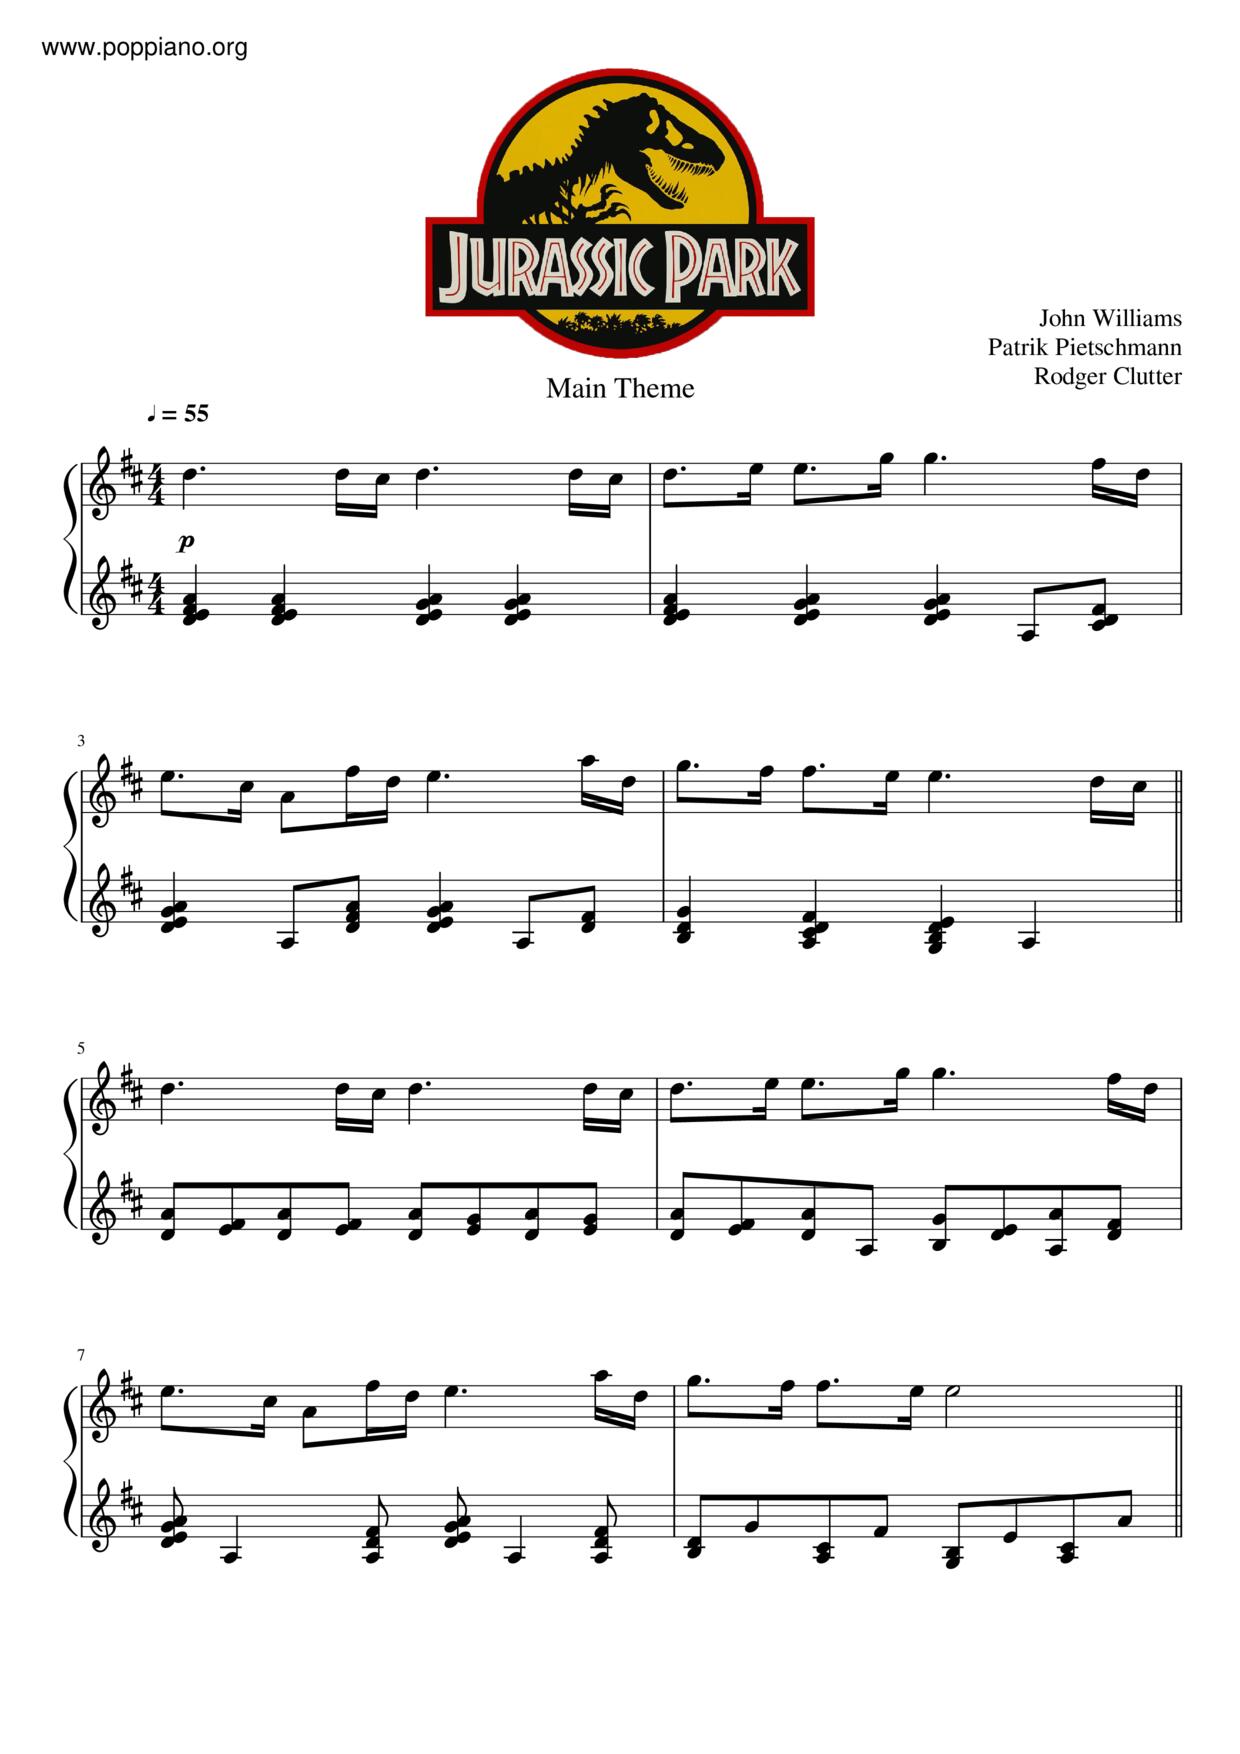 Jurassic Park Theme琴谱